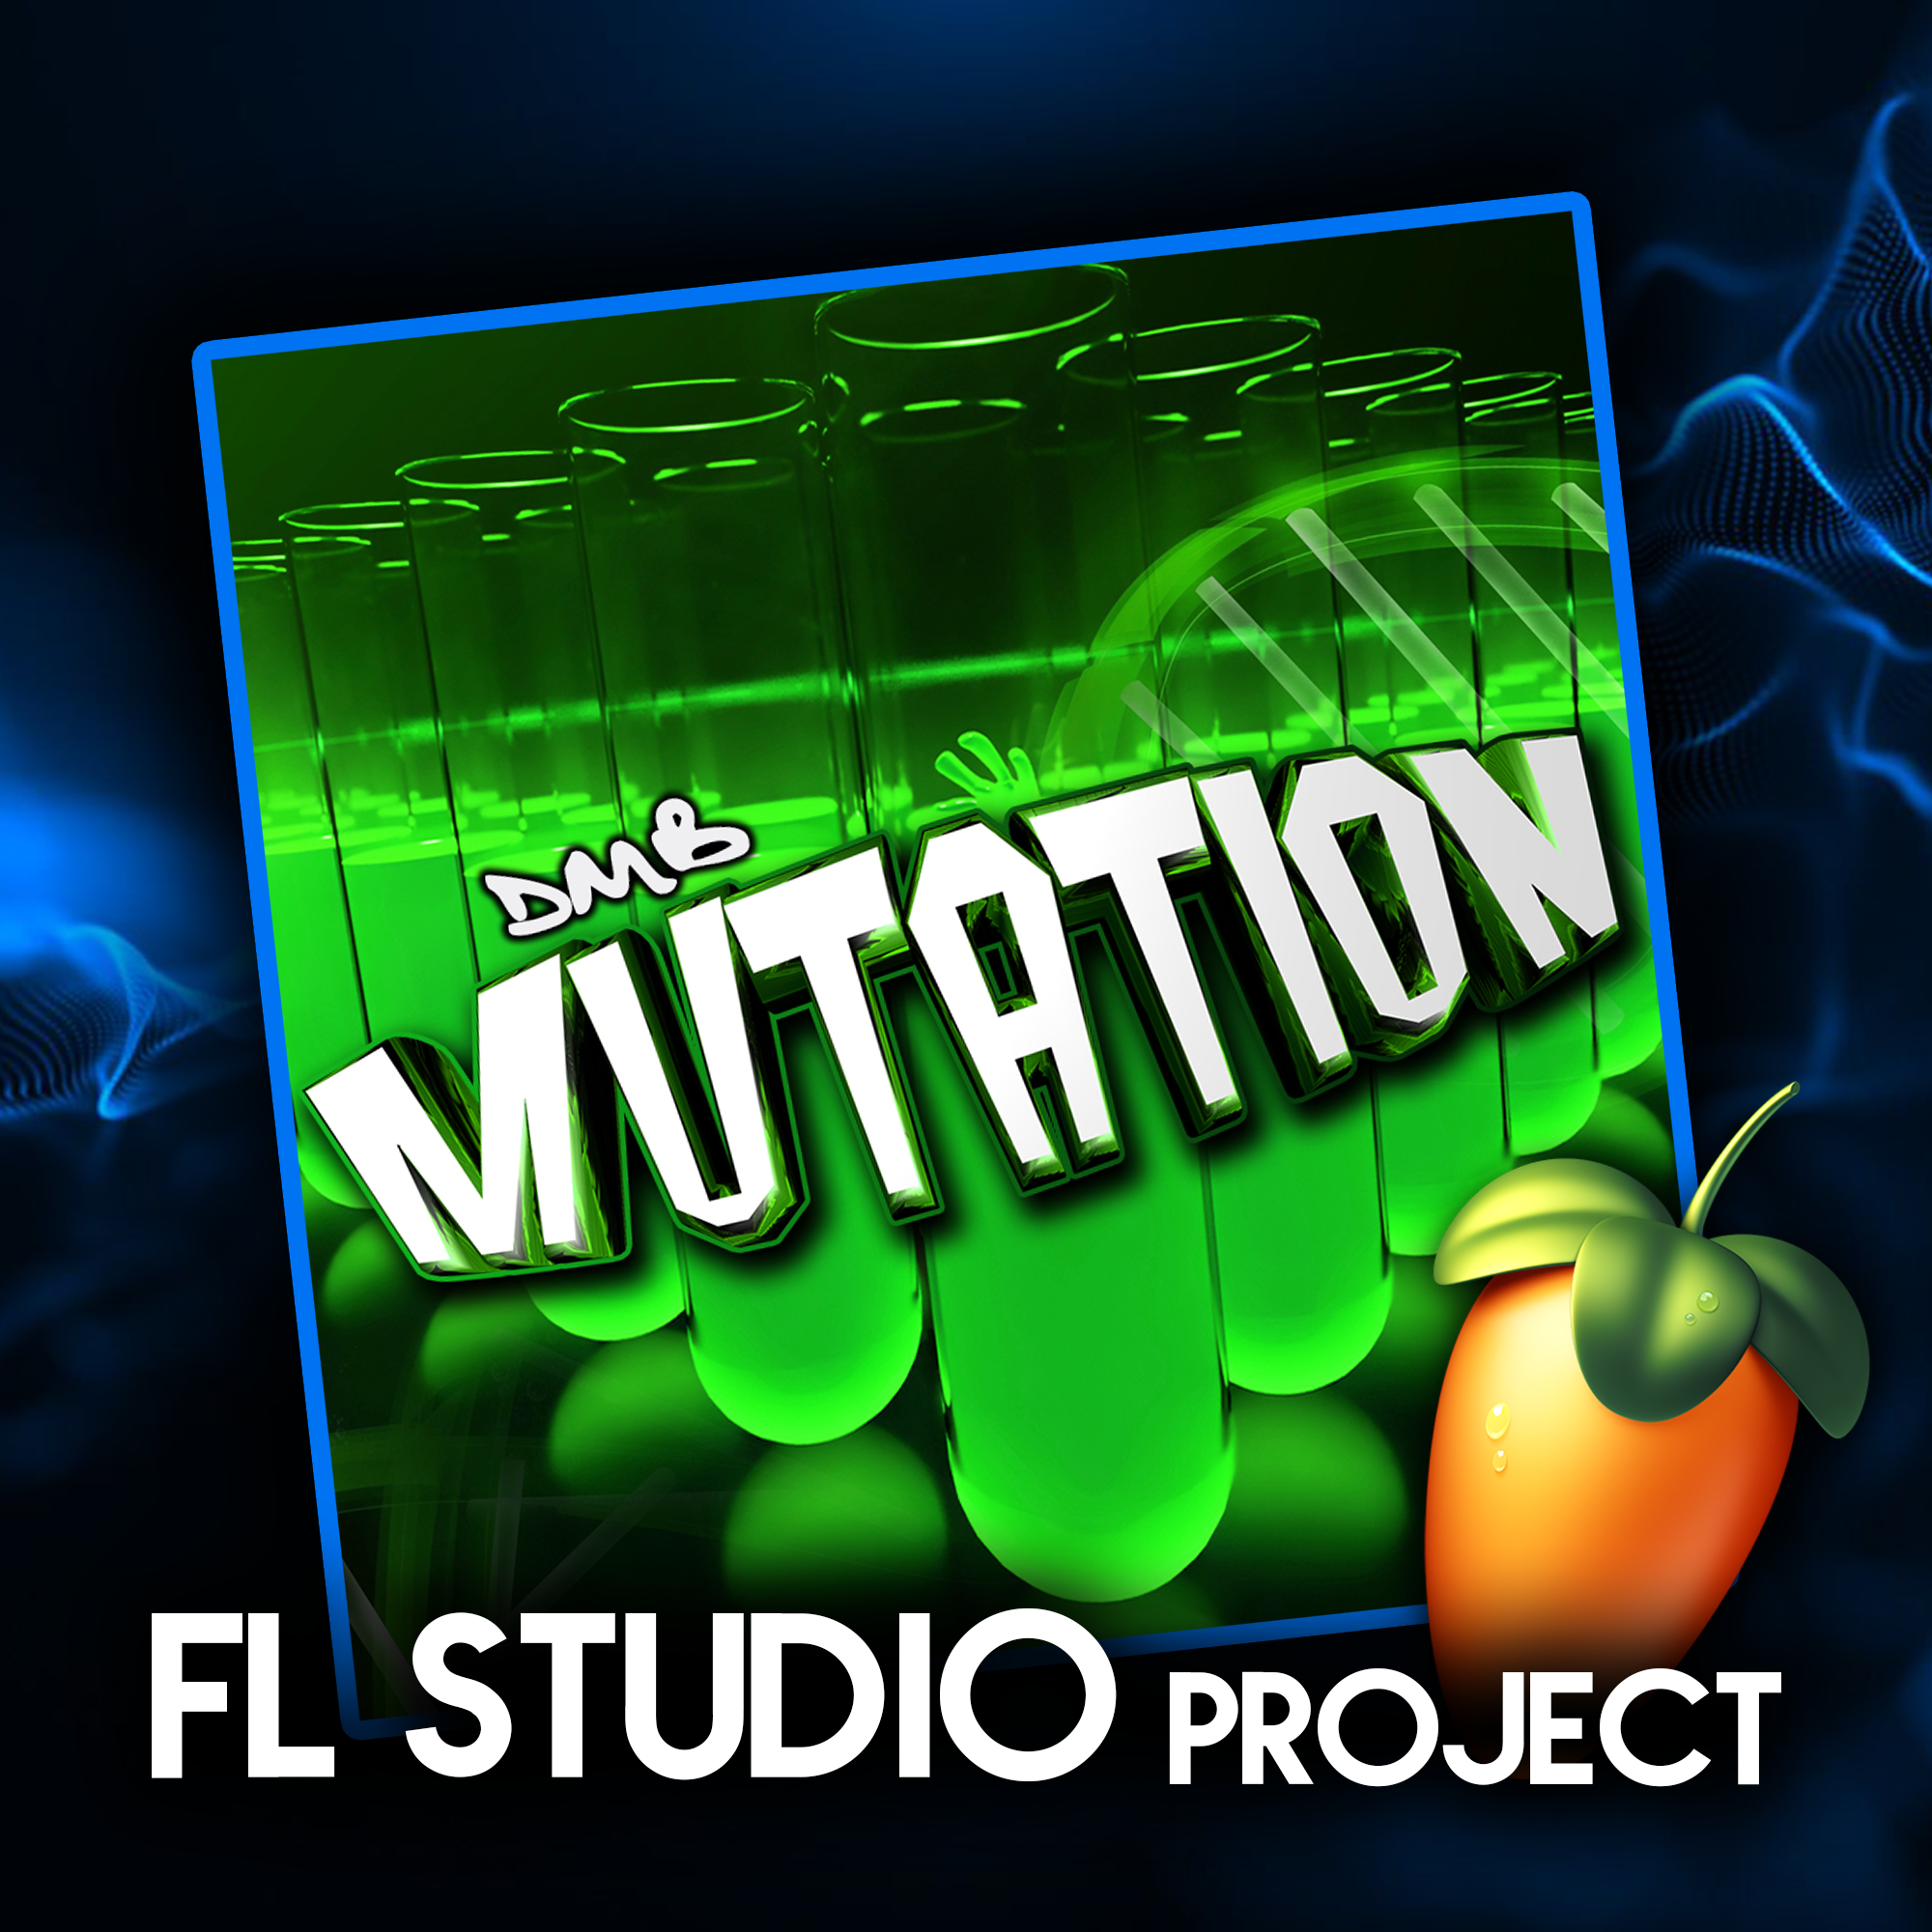 DMB - Mutation (FL Studio Project) - Rewired Records